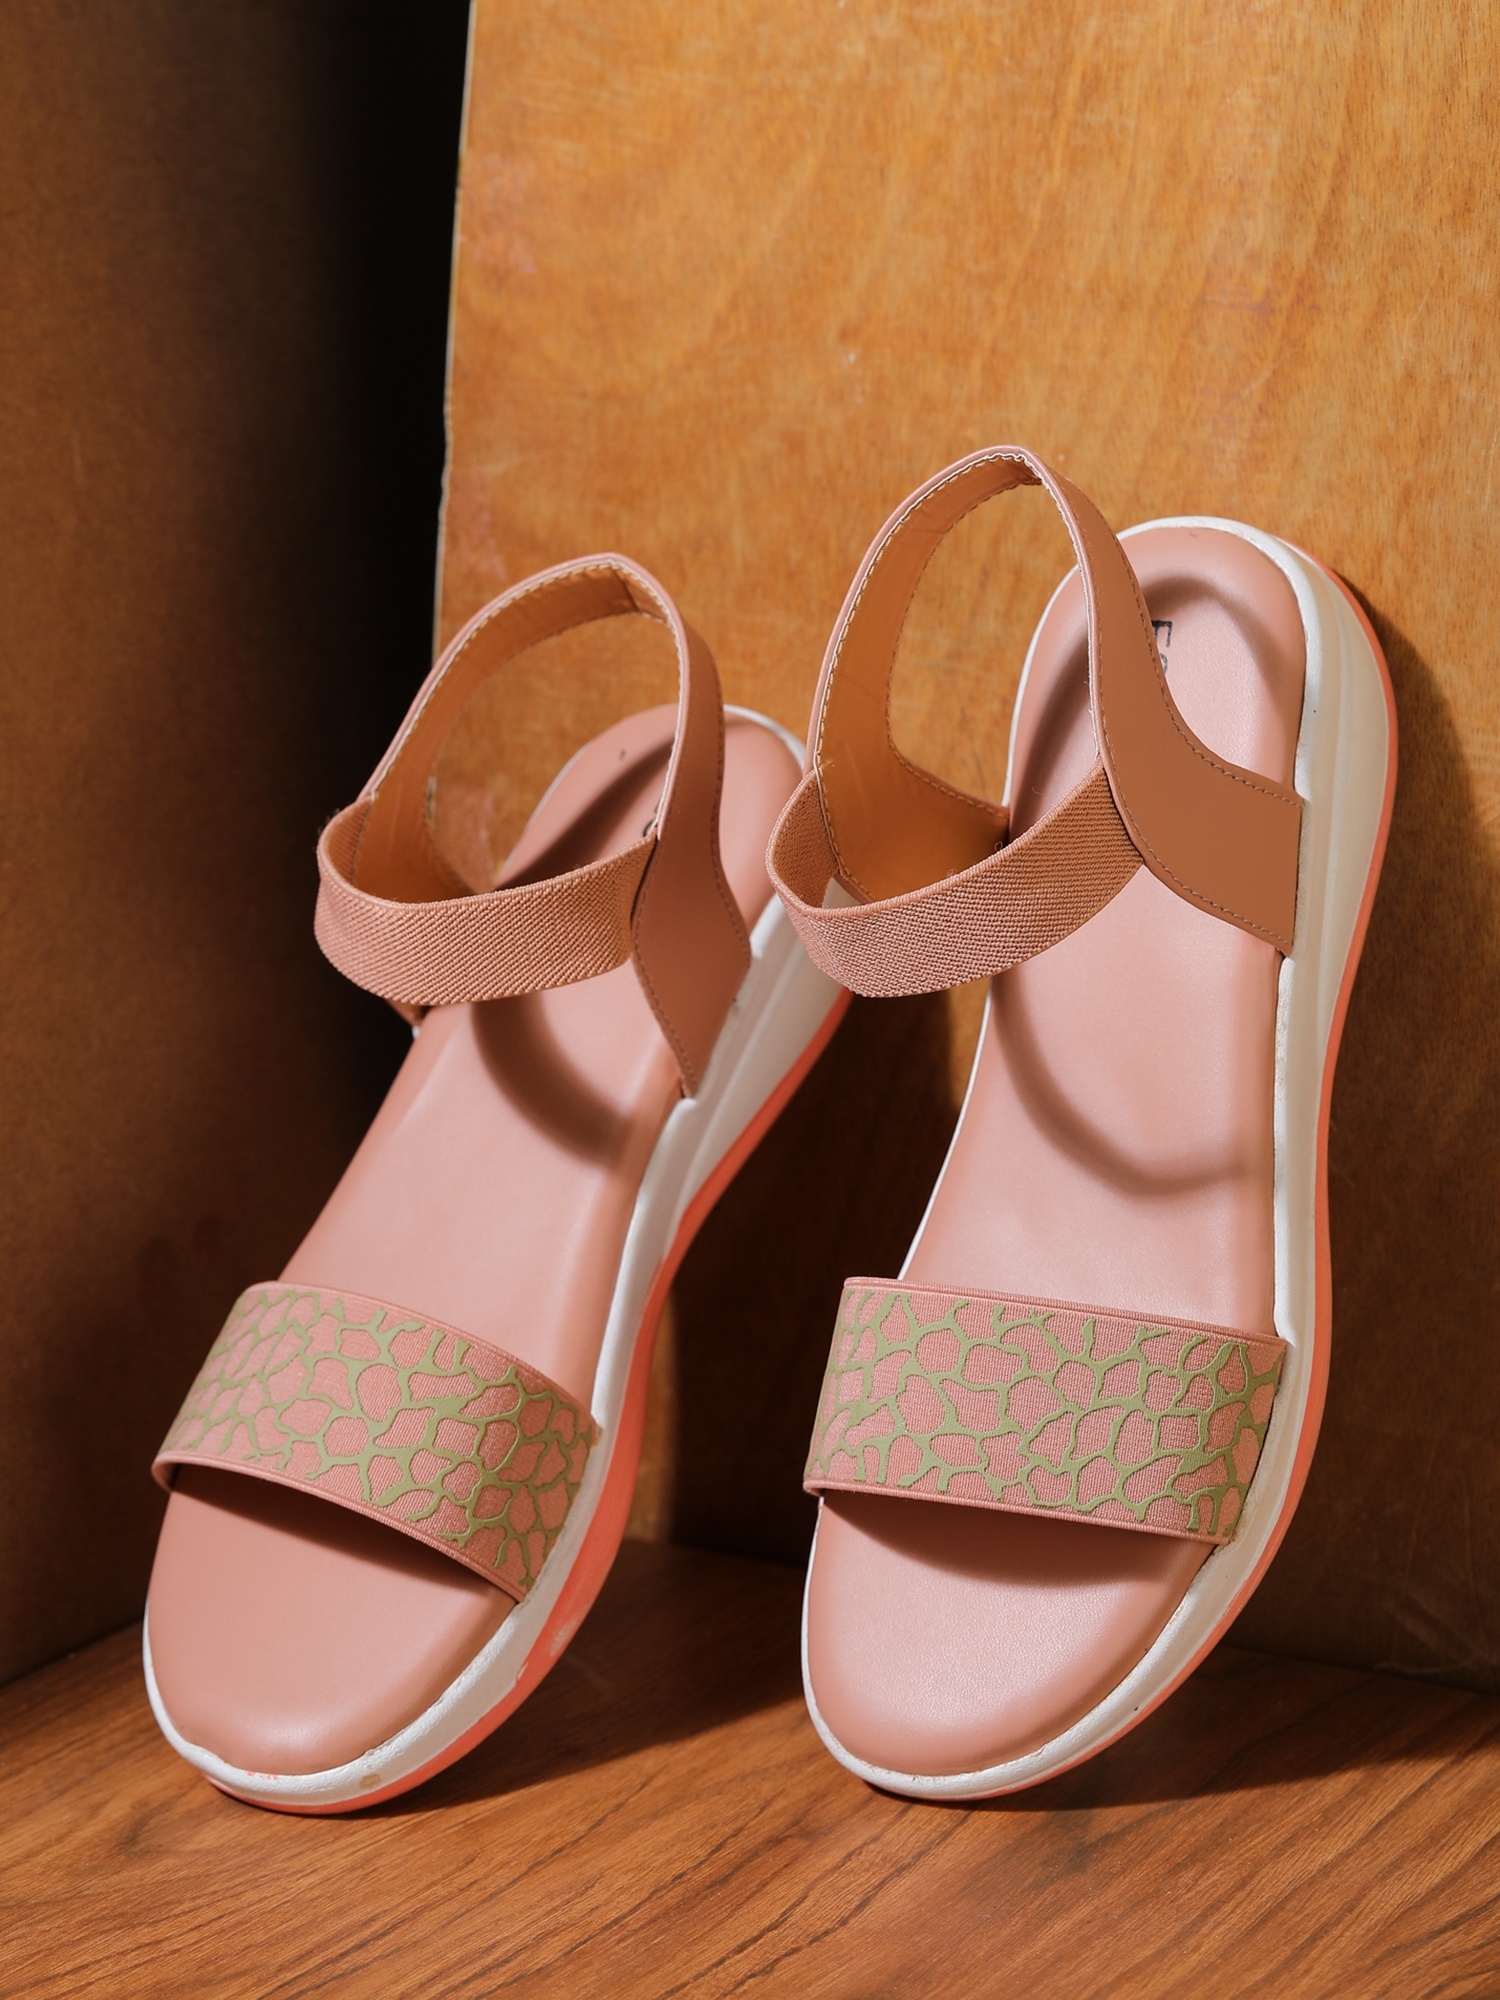 Estatos PU Peach Coloured Buckle Closure Open Toe Sandals 